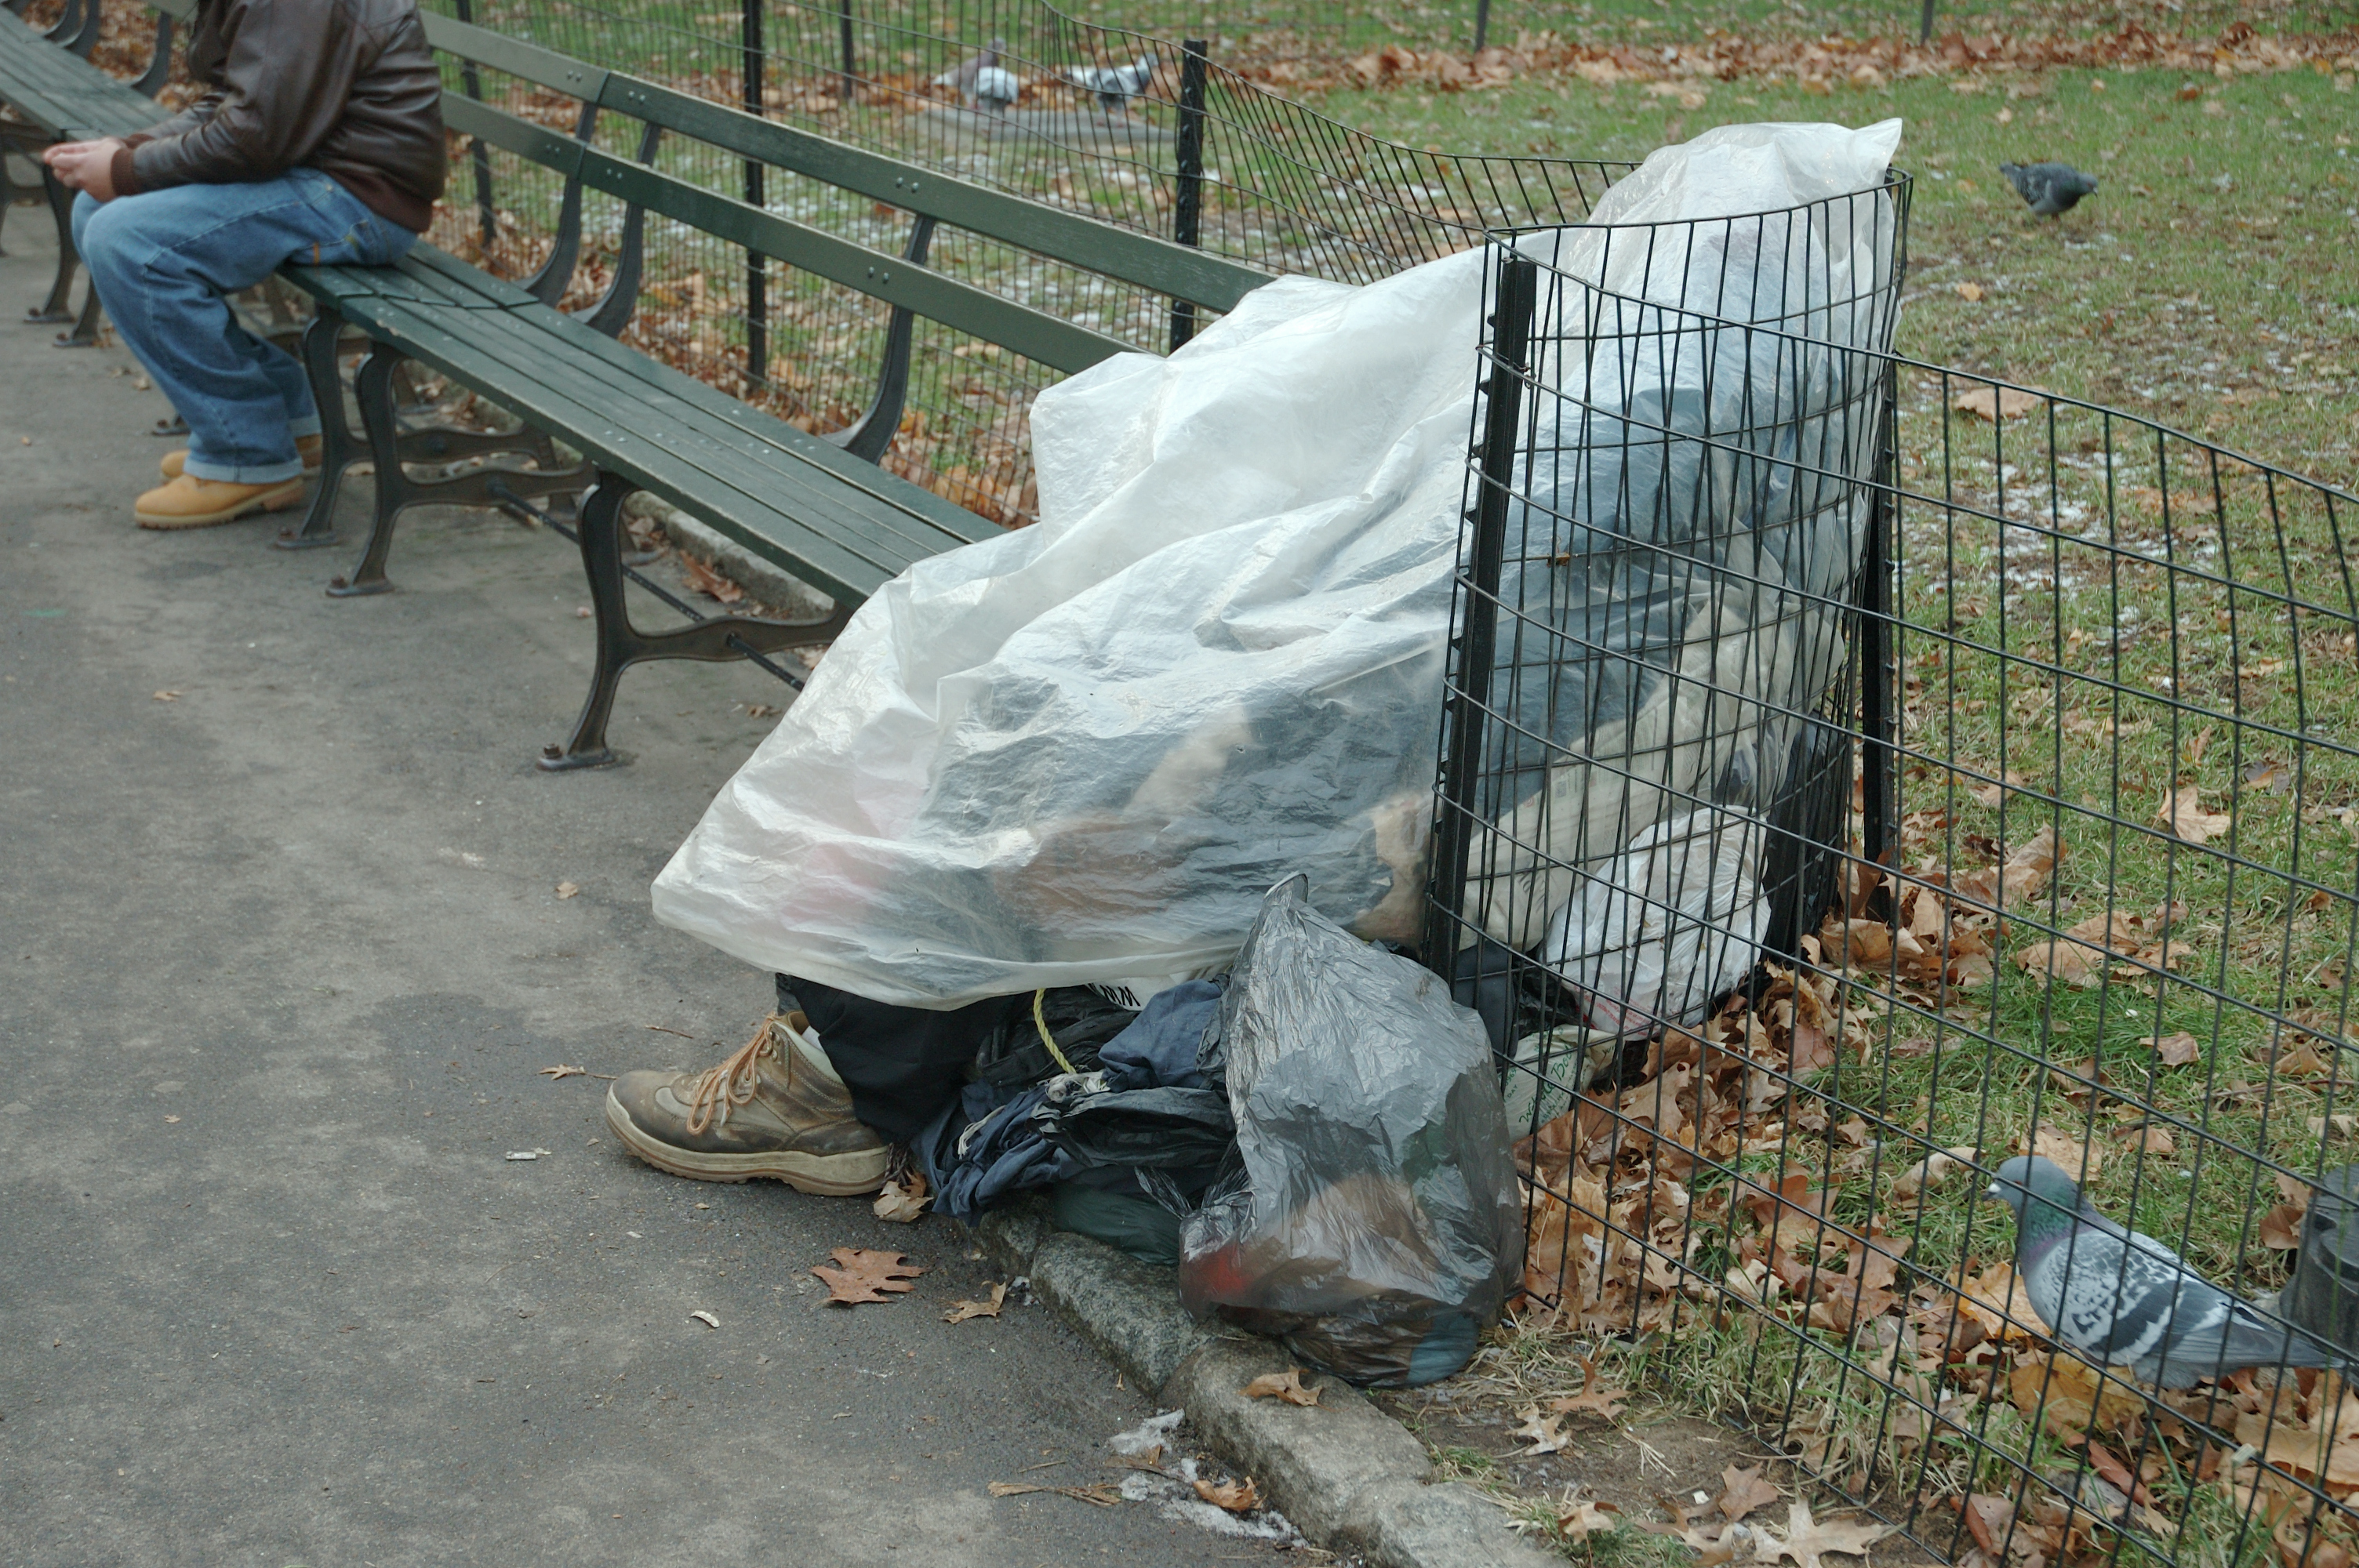 NEWSLINE: Brad Lander wants to end street homelessness as NYC's next mayor